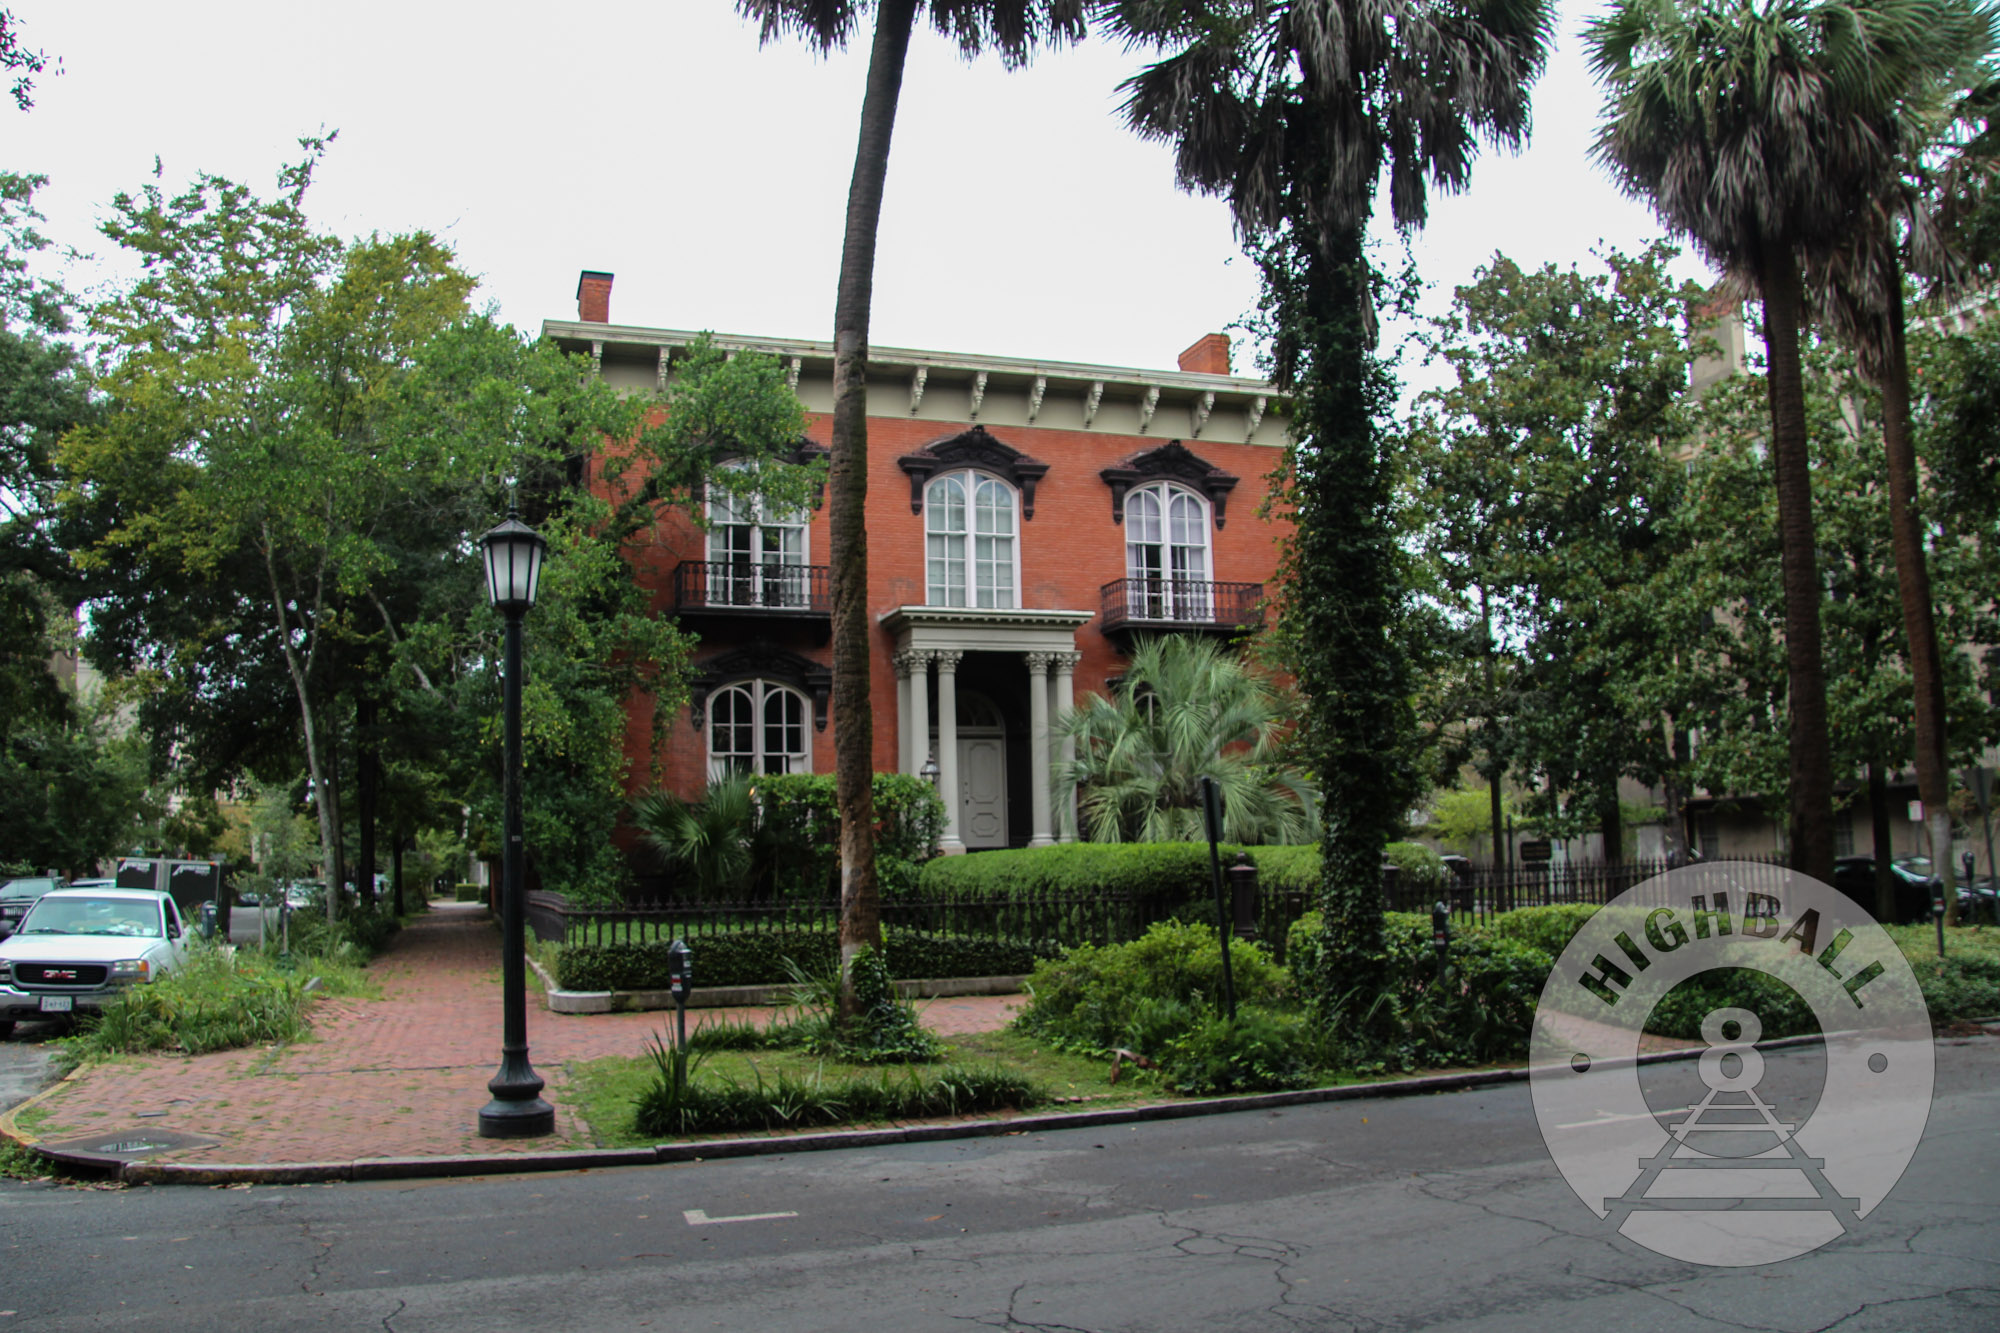 Street scene in the Historic District, Savannah, Georgia, USA, 2015.